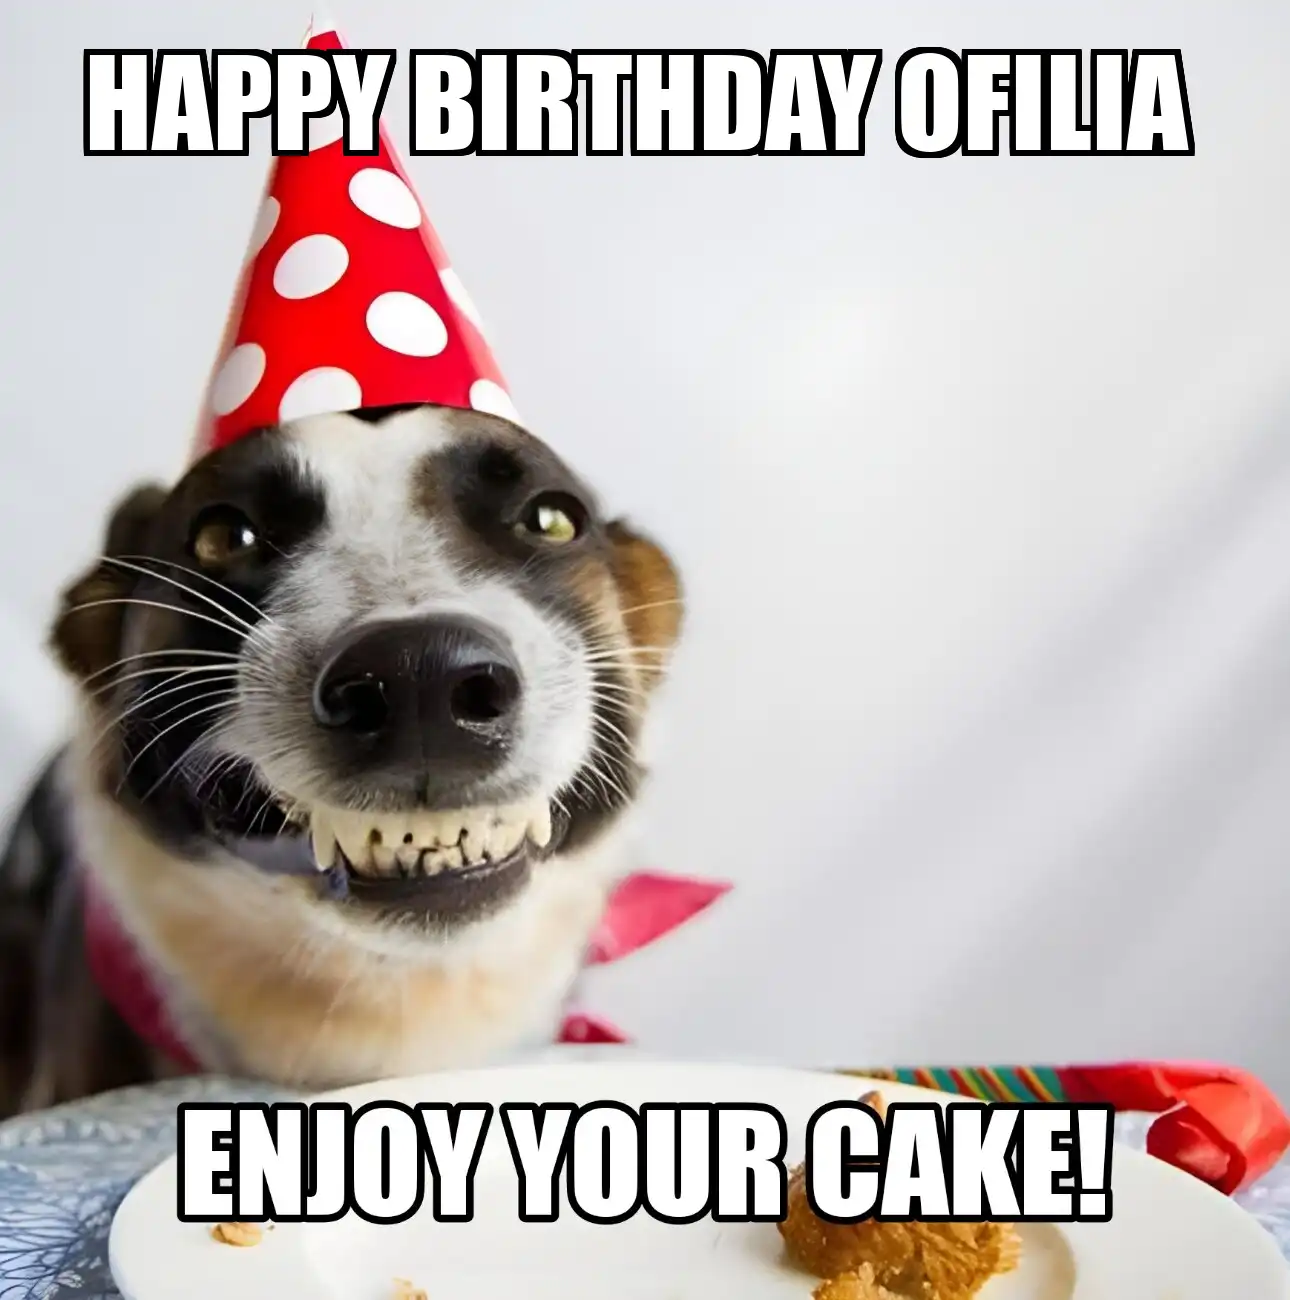 Happy Birthday Ofilia Enjoy Your Cake Dog Meme